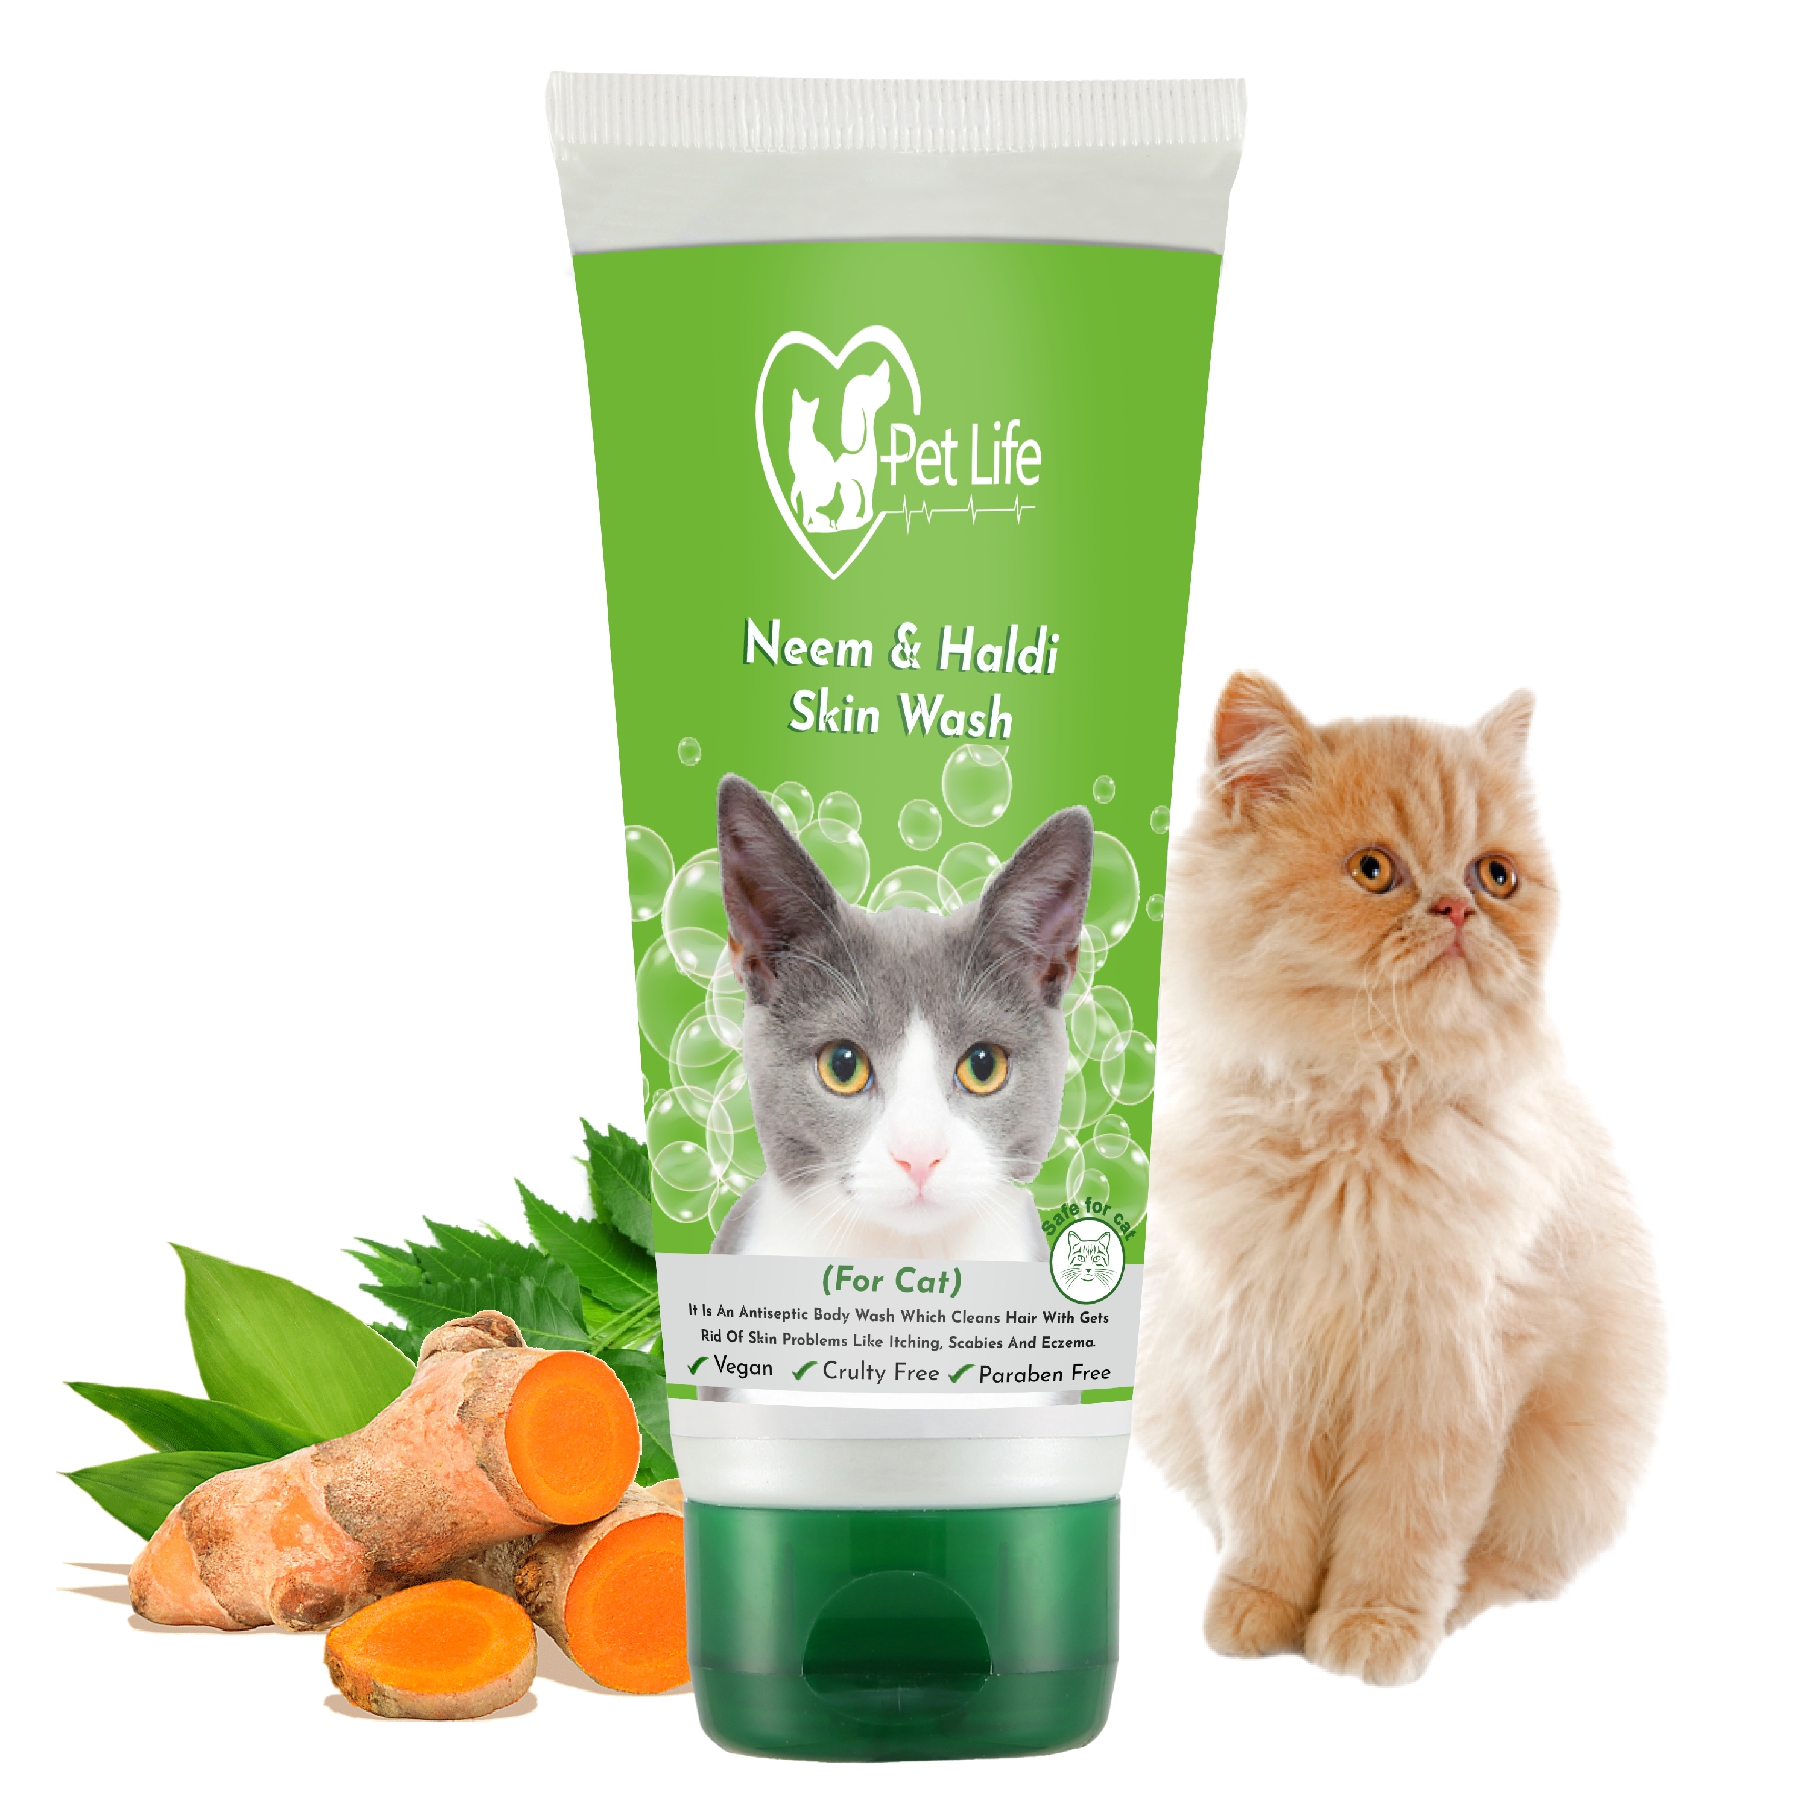 Organic Haldi Neem Skinwash for All Cat Breed